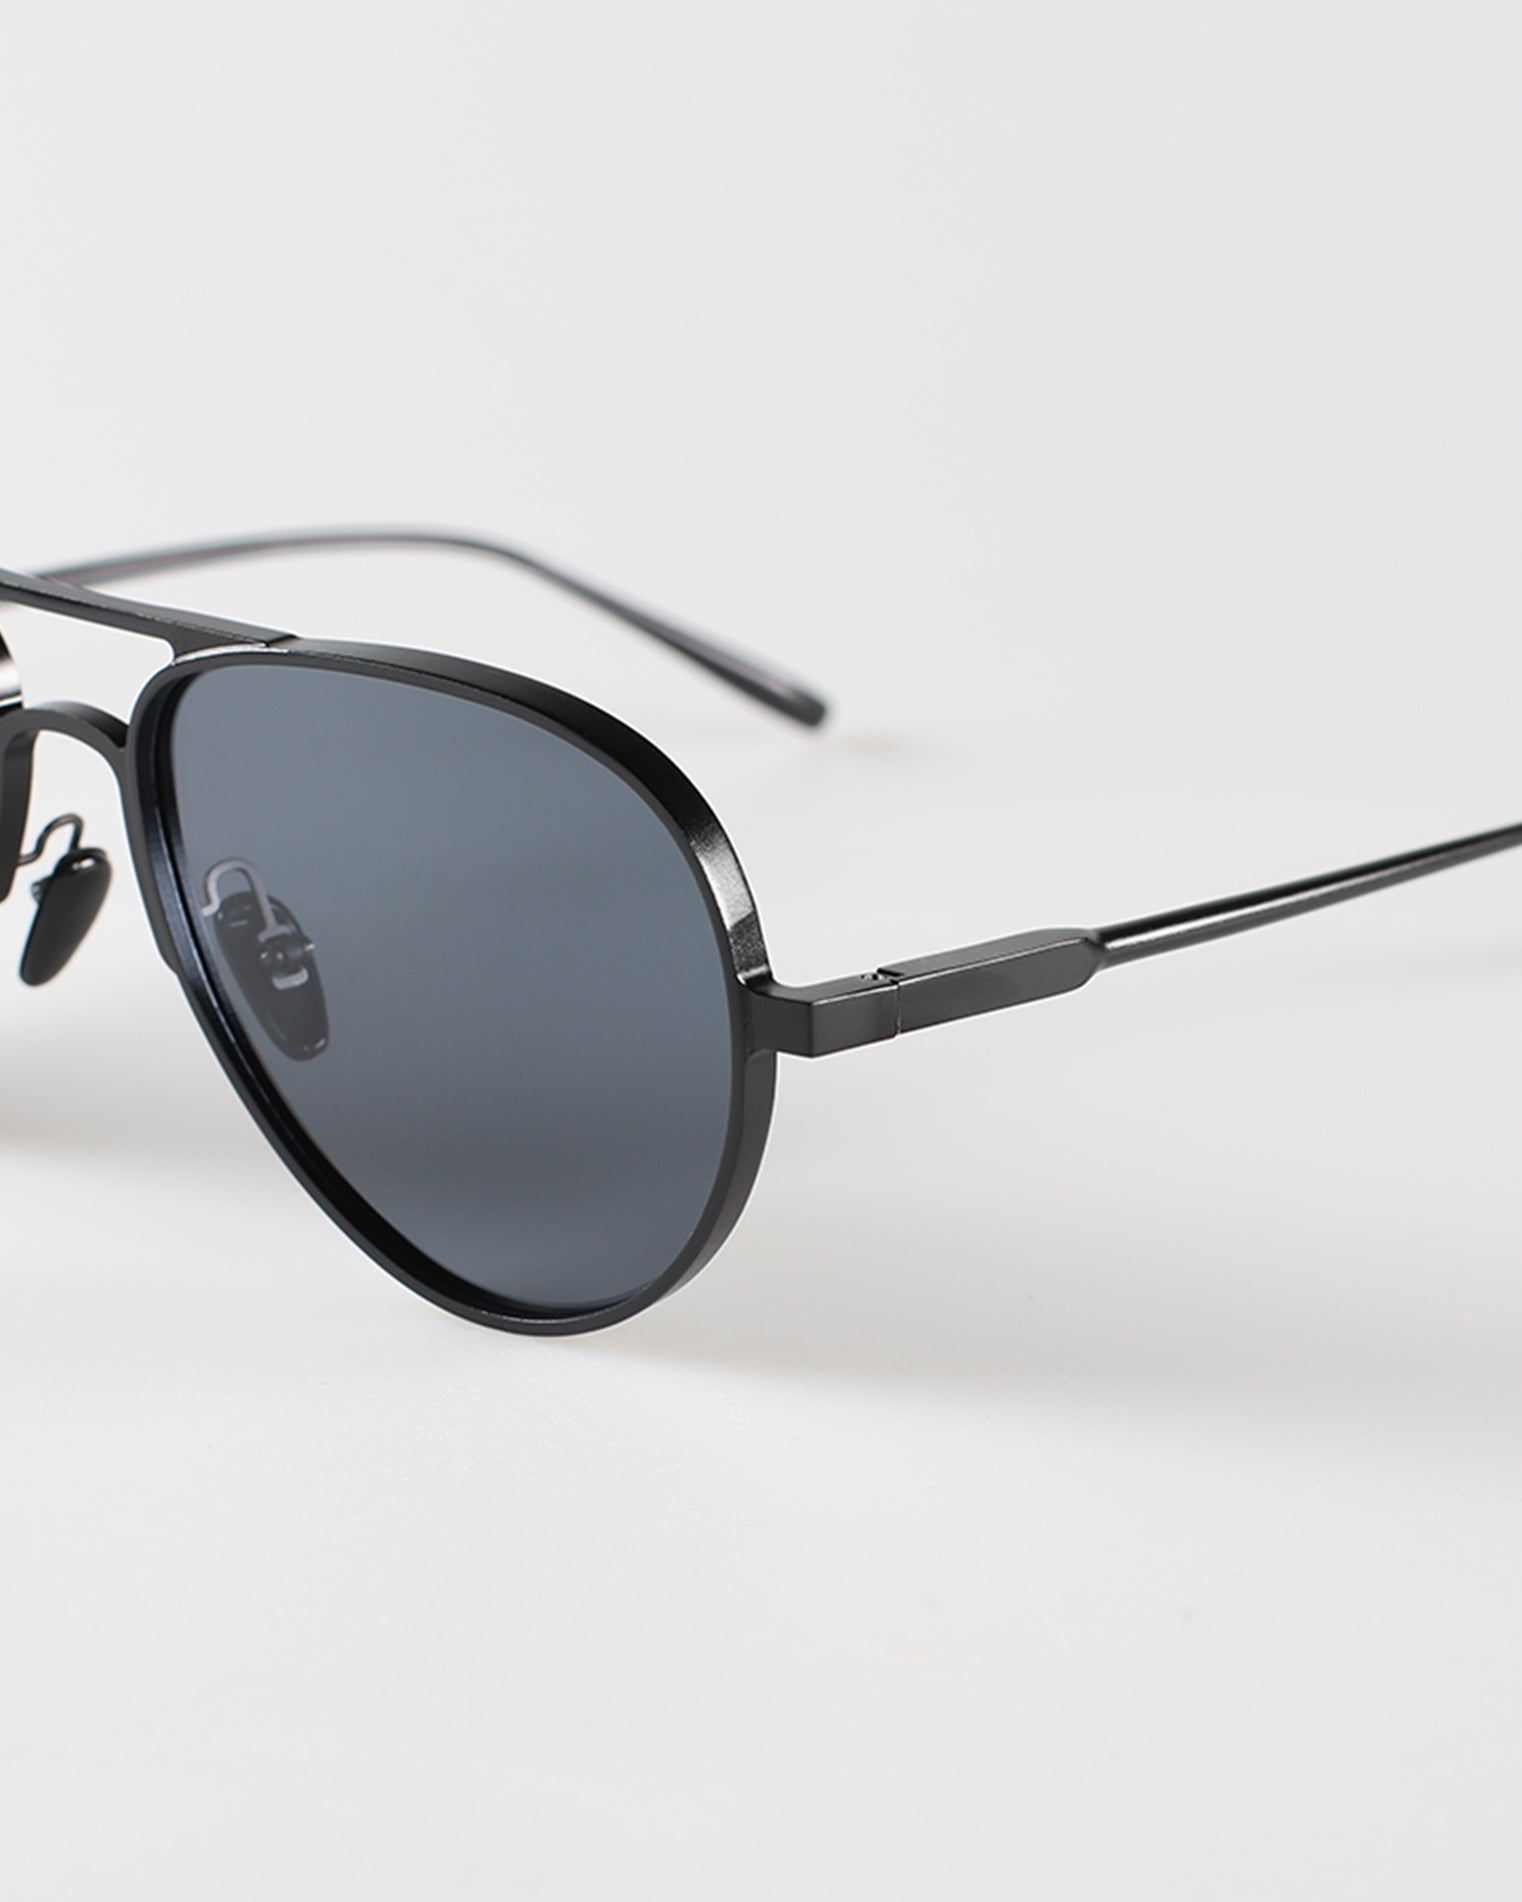 Men's Aviator Sunglasses, Durable Metal & Polarized